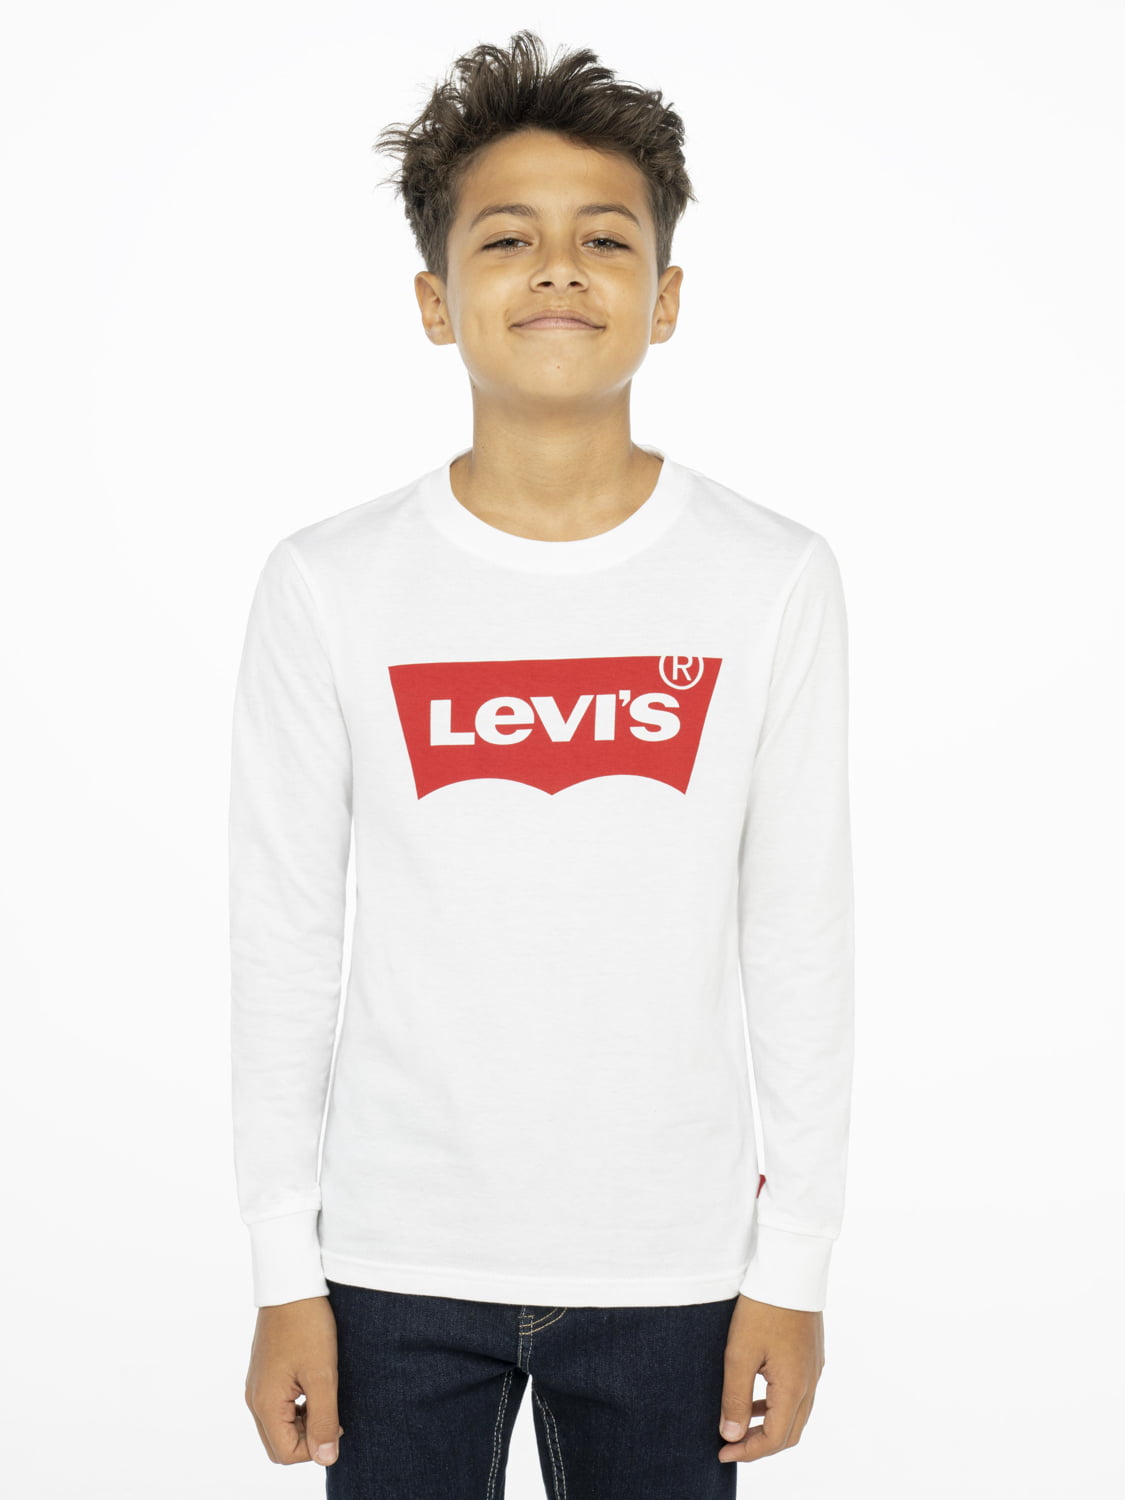 Louisville Slugger Boy Tops & T-Shirts for Boys Sizes (4+)